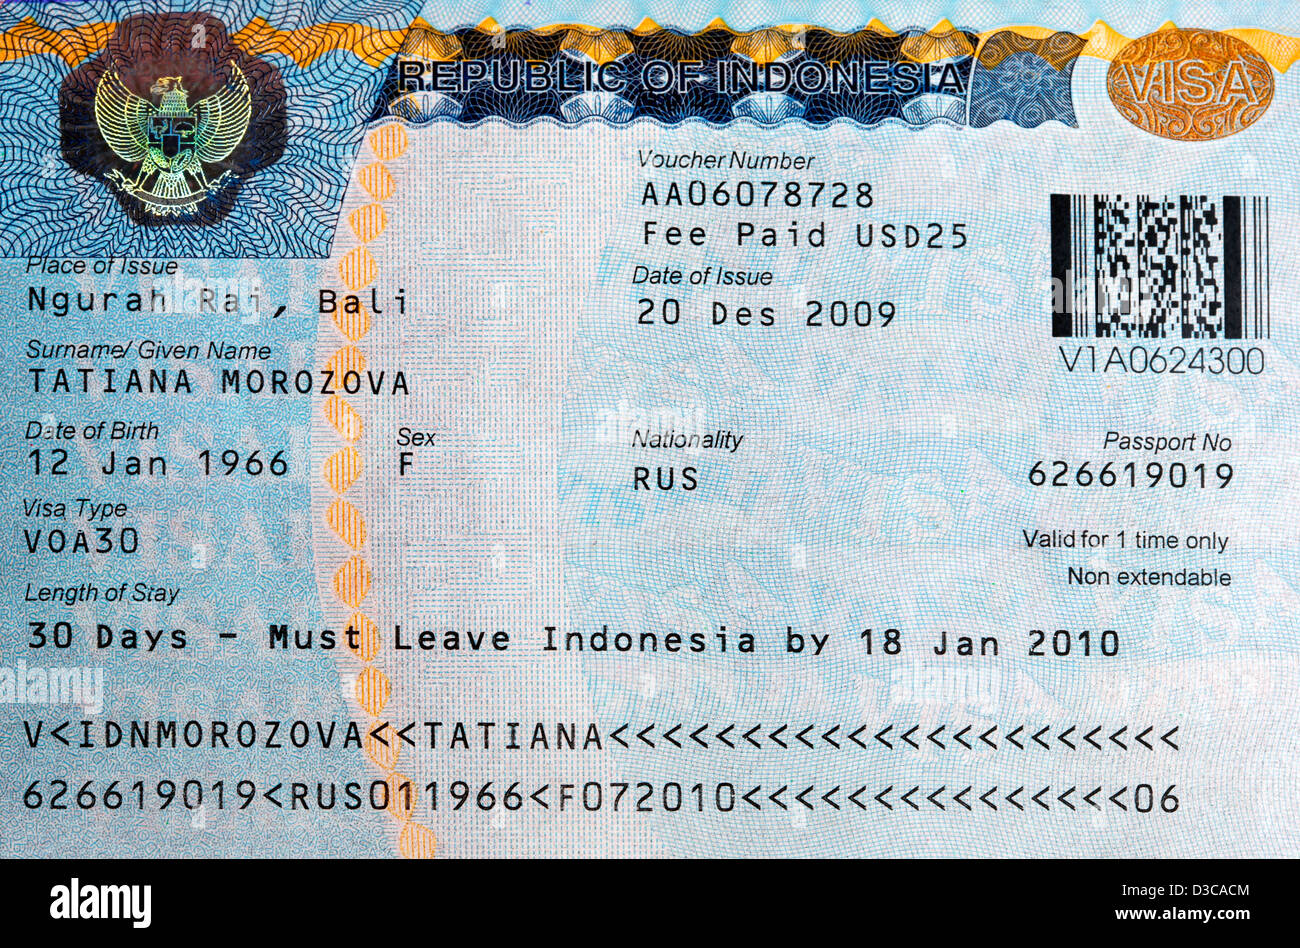 The visa to Bali, Indonesia Stock Photo - Alamy